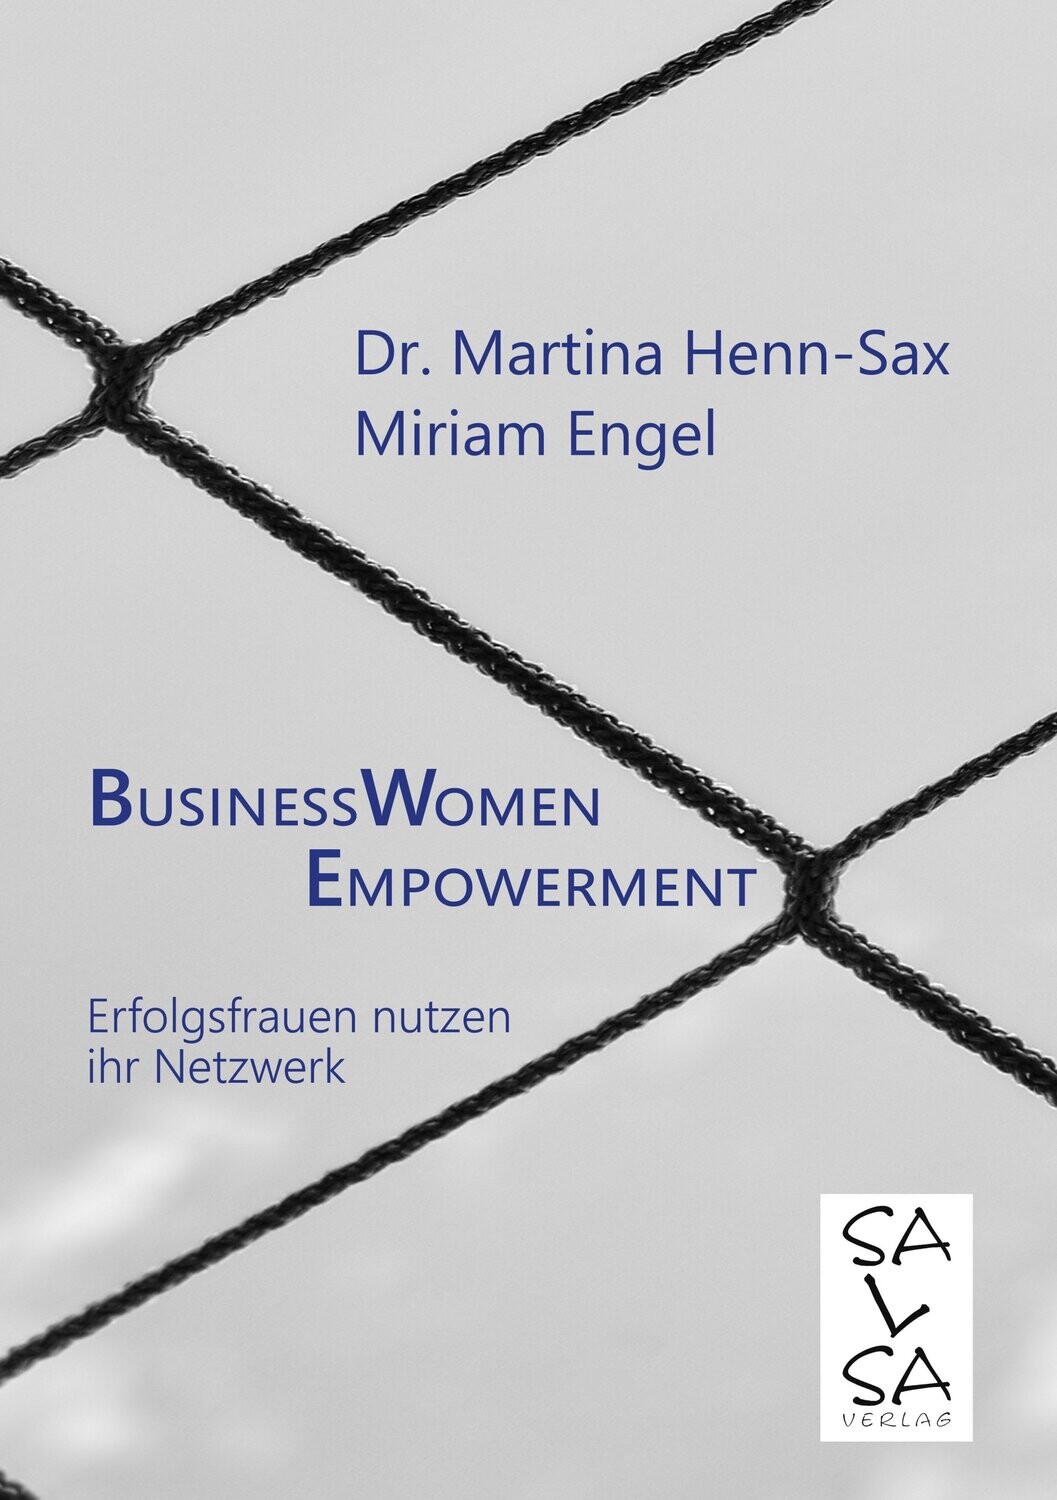 Dr. Martina Henn-Sax & Miriam Engel -
BusinessWomen Empowerment